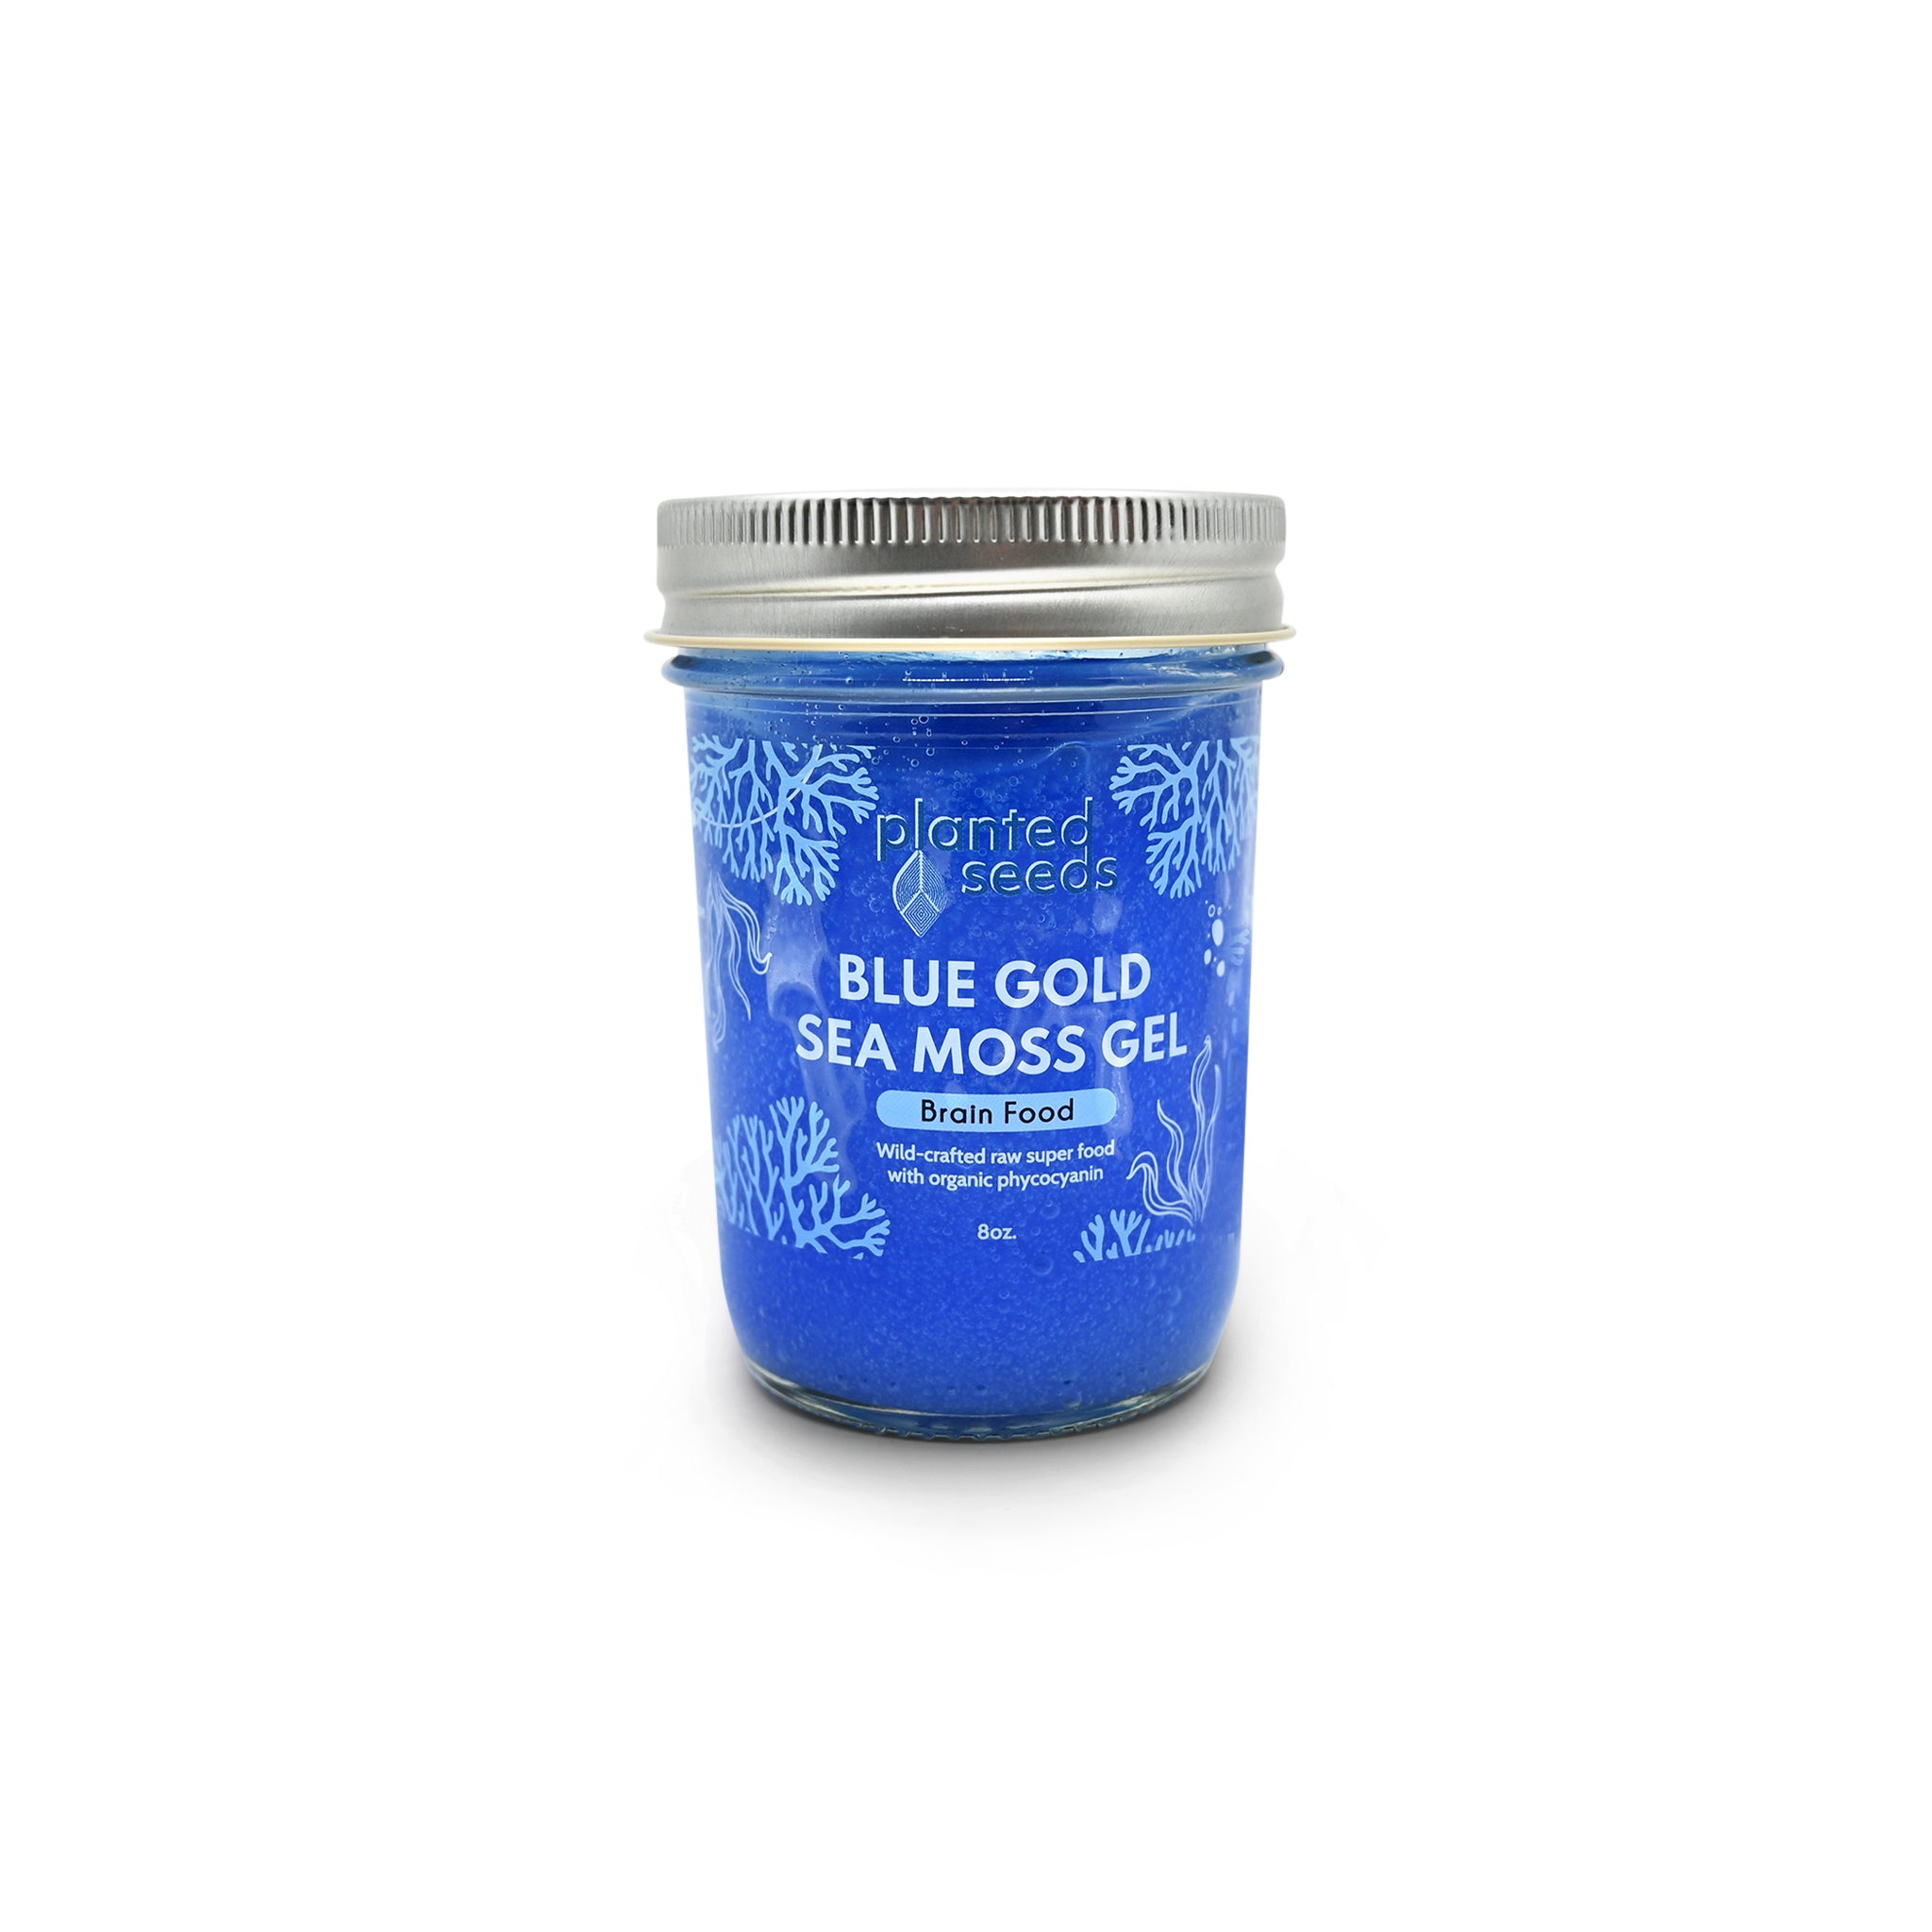 Blue Gold Sea Moss Gel - 8oz Jar - Planted Seeds Sea Moss